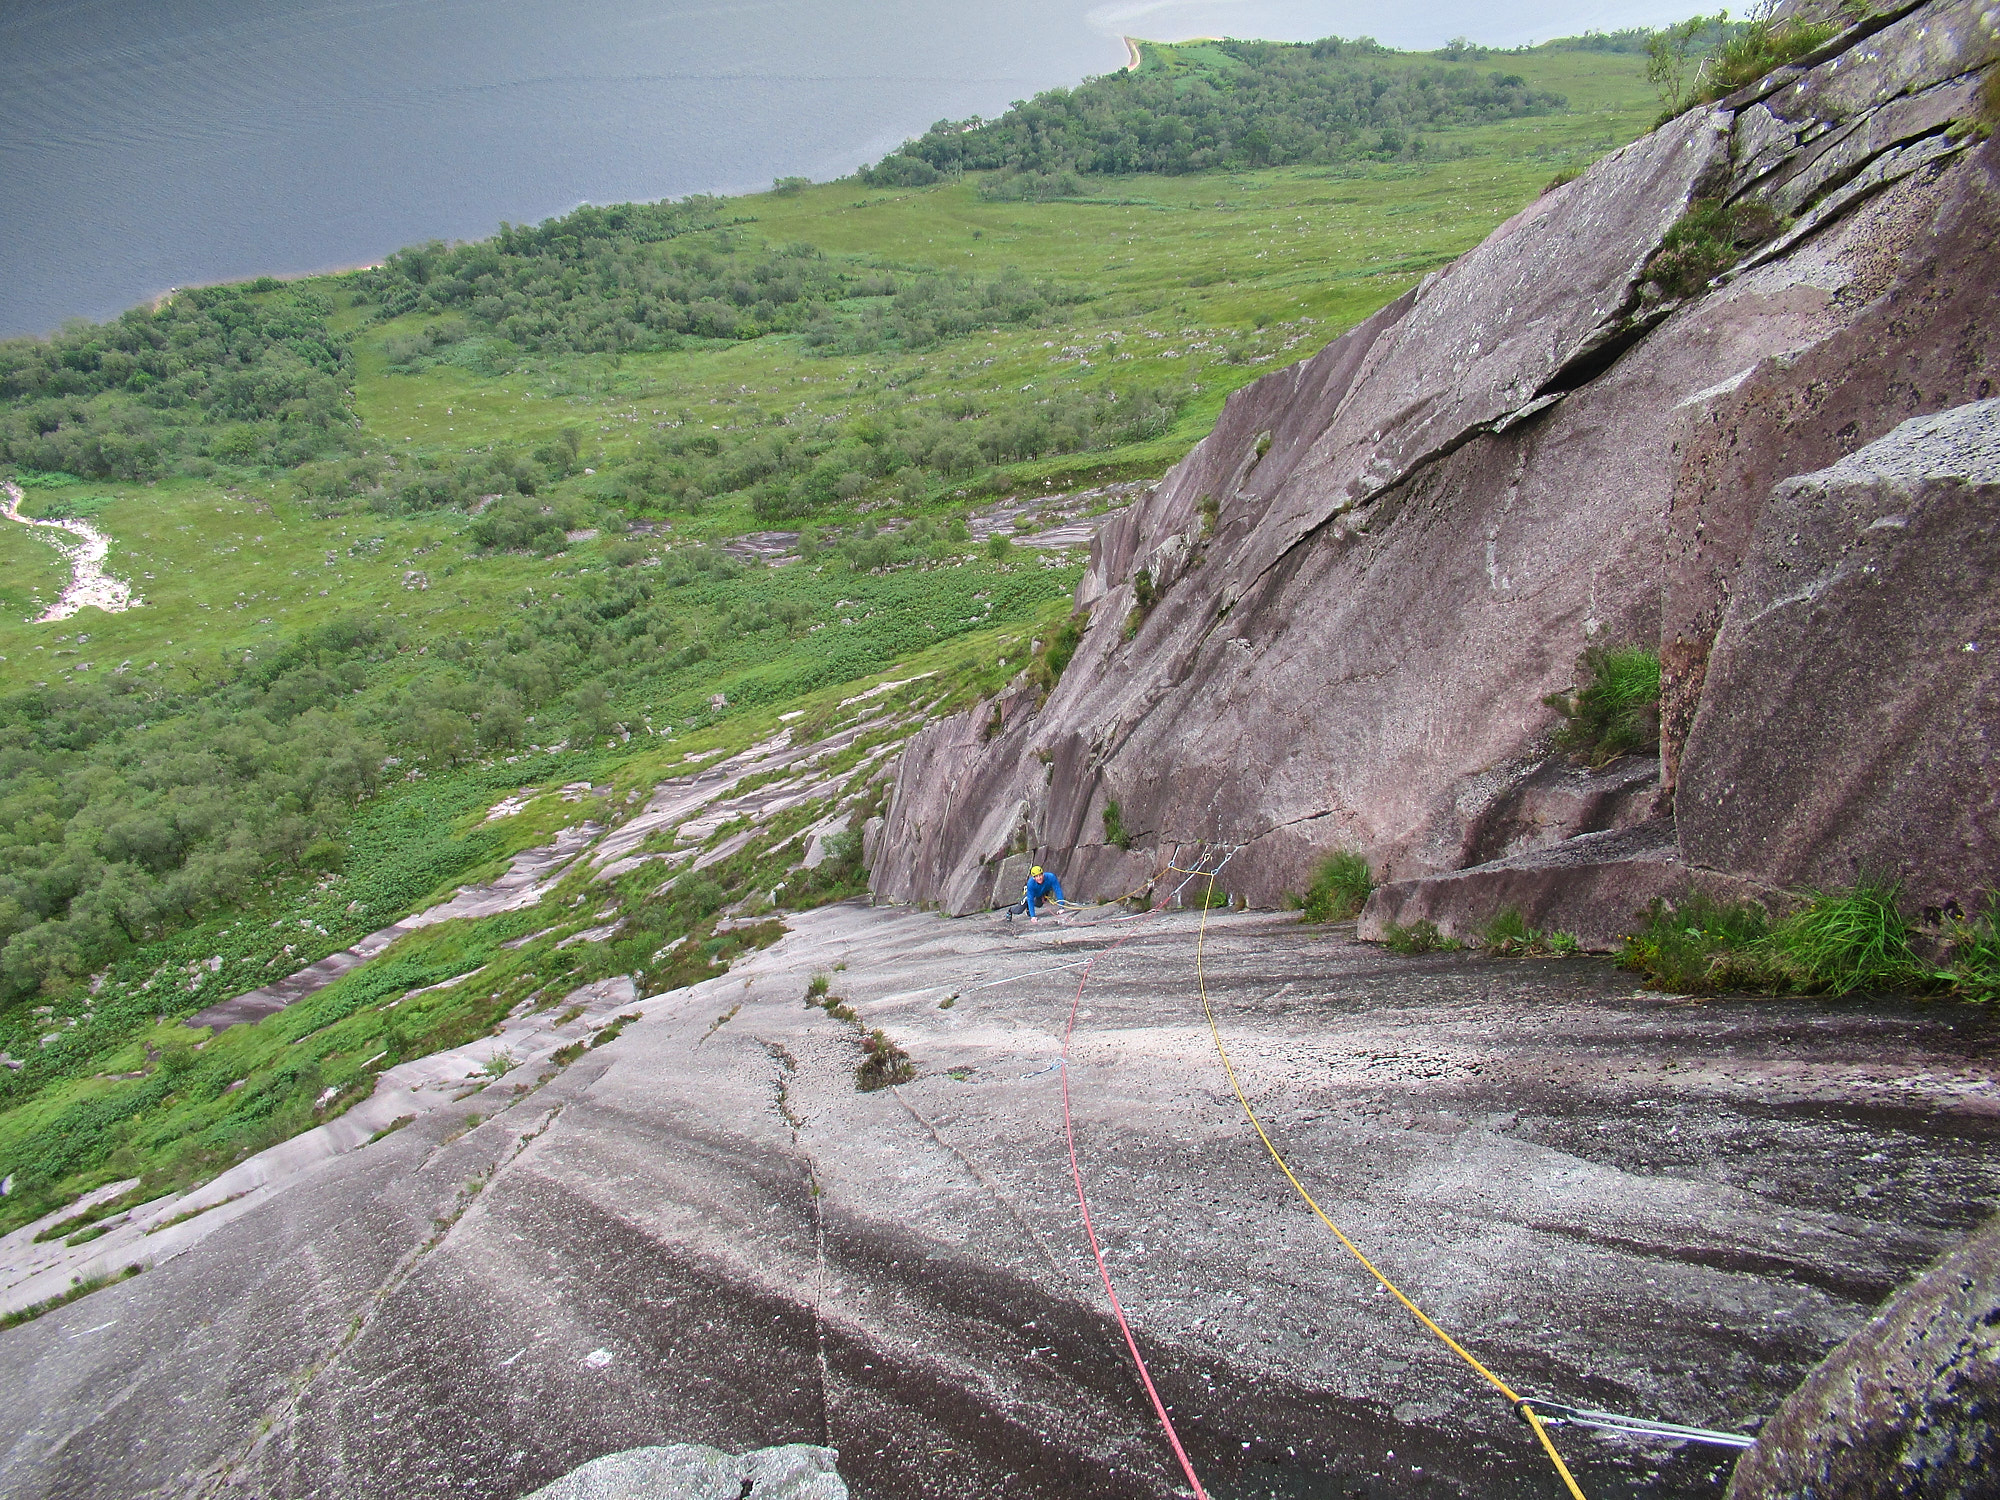 scottish summer rock climbing on hammer etive slabs